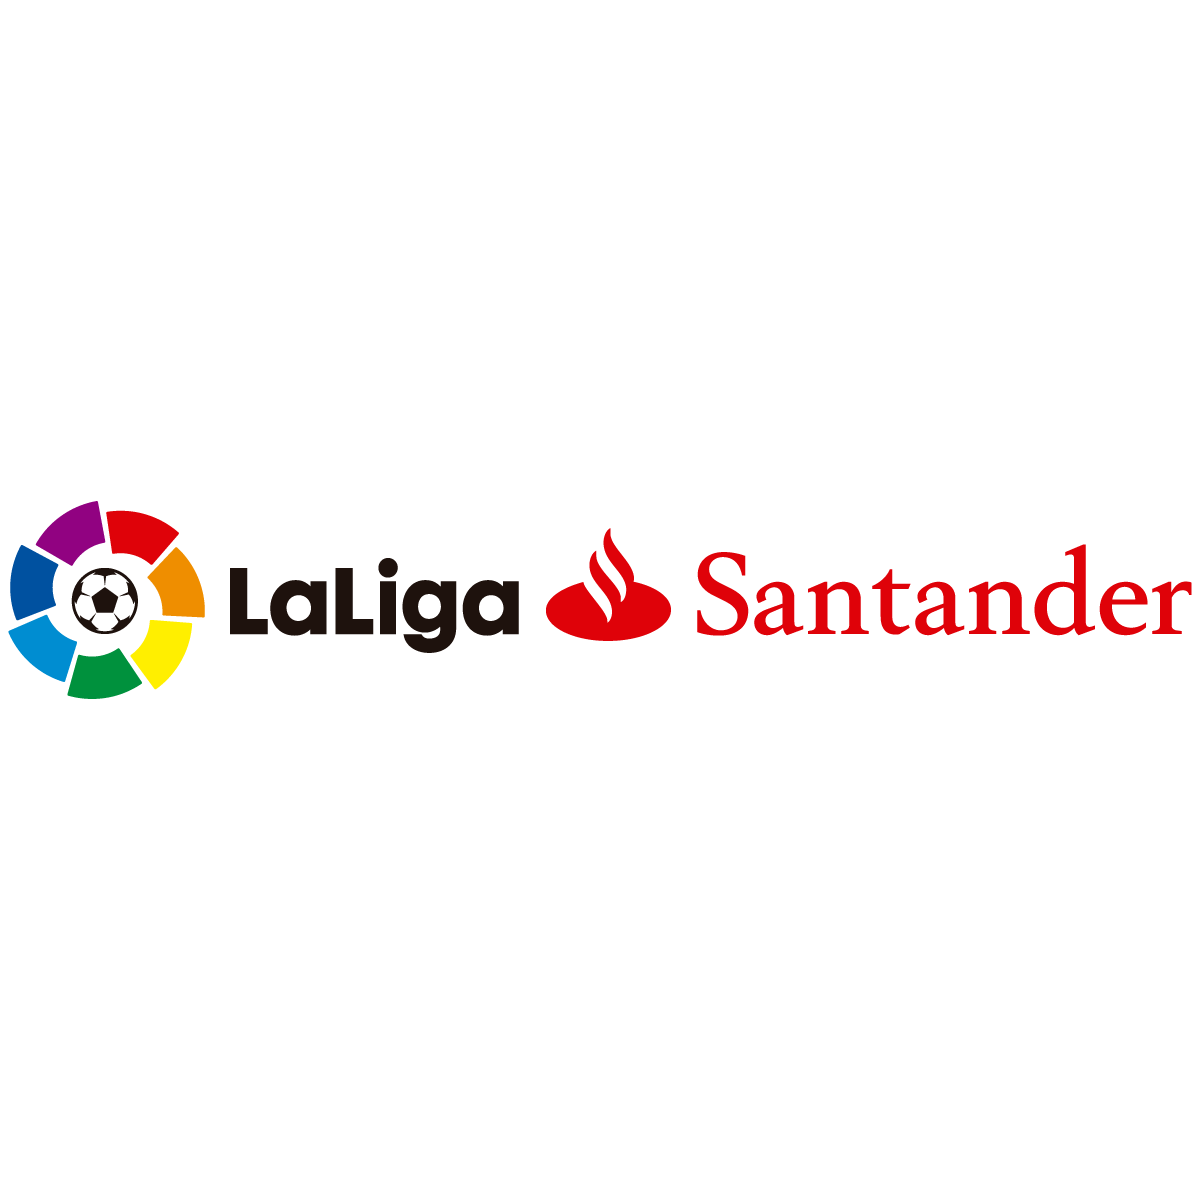 LaLiga Santander Wallpapers - Wallpaper Cave